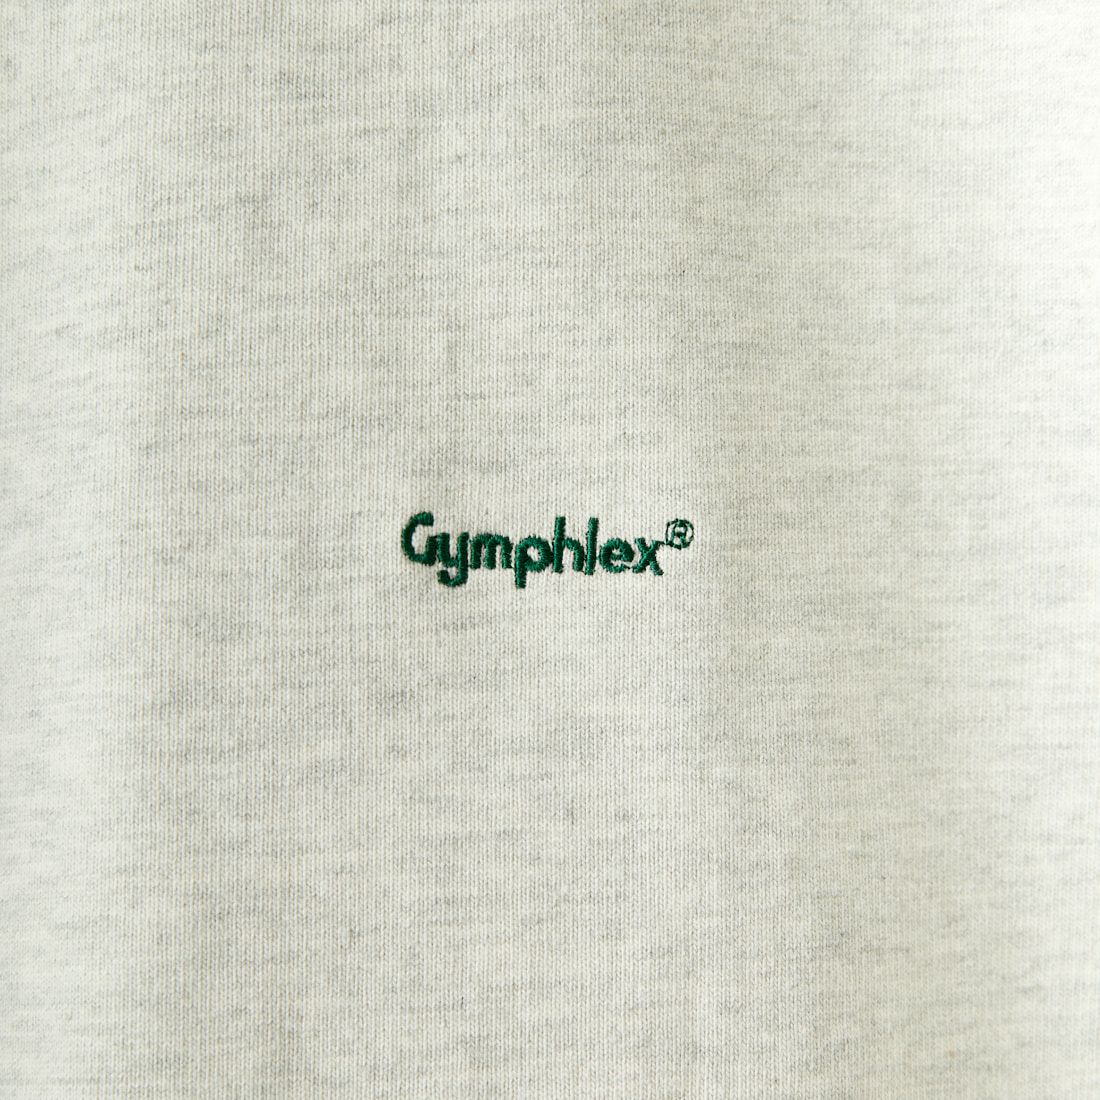 Gymphlex [ジムフレックス] ロゴ刺繍 ロングスリーブTシャツ [GY-C0102HWJ] H.LT.GREY